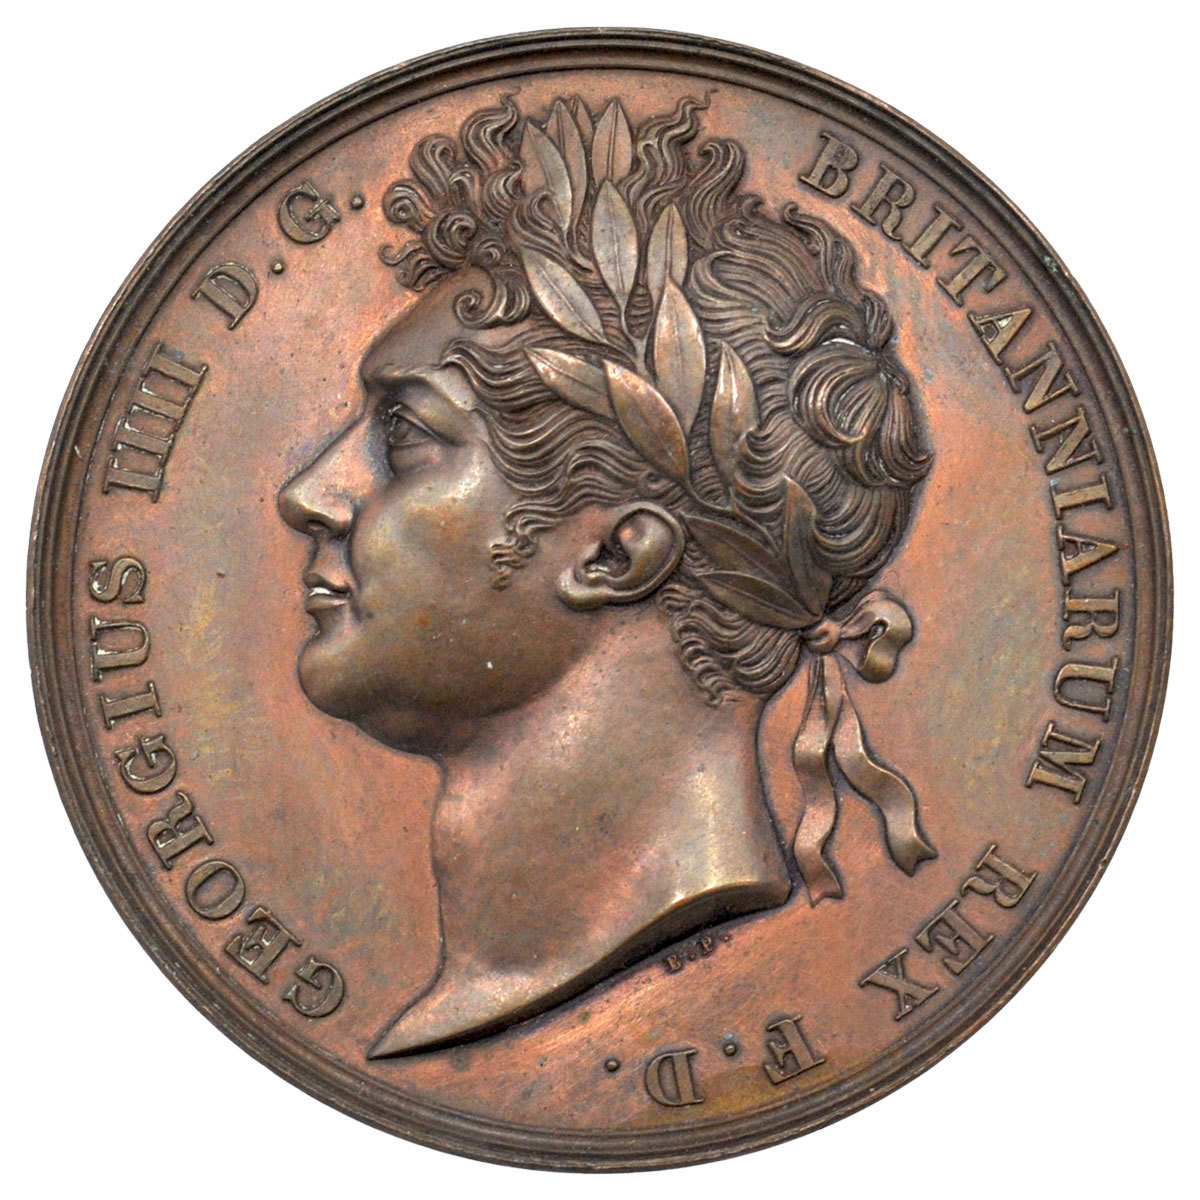 1821 Copper George IV Coronation Medal Obverse.